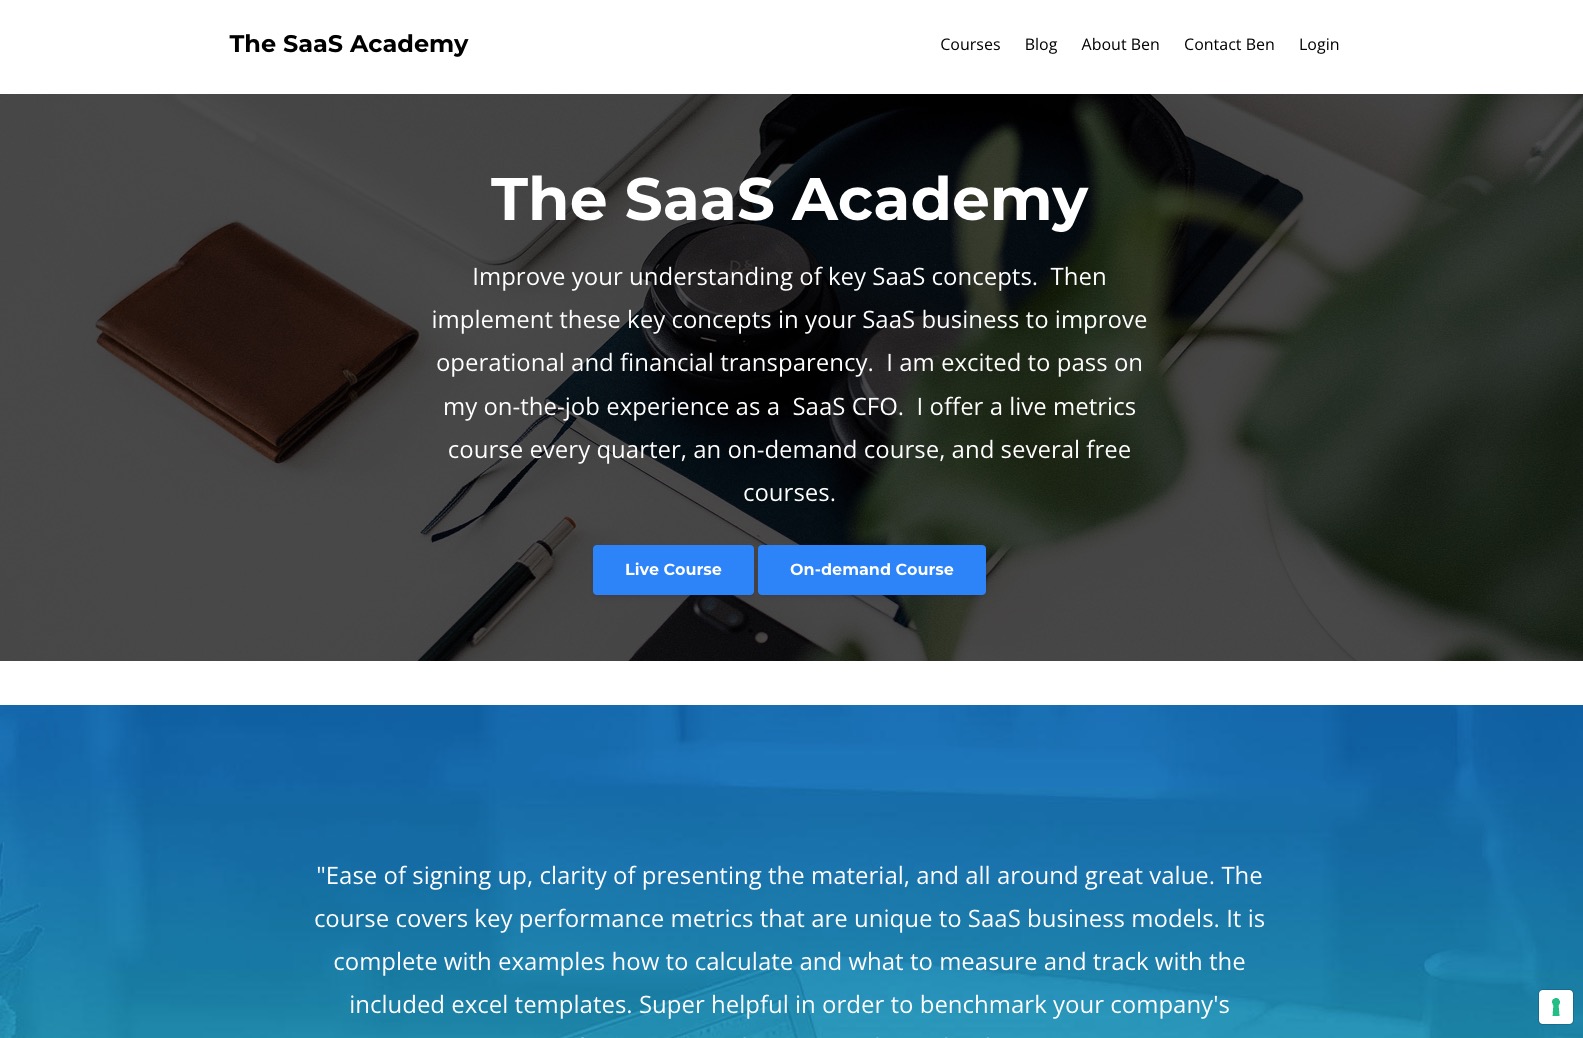 SaaS Academy